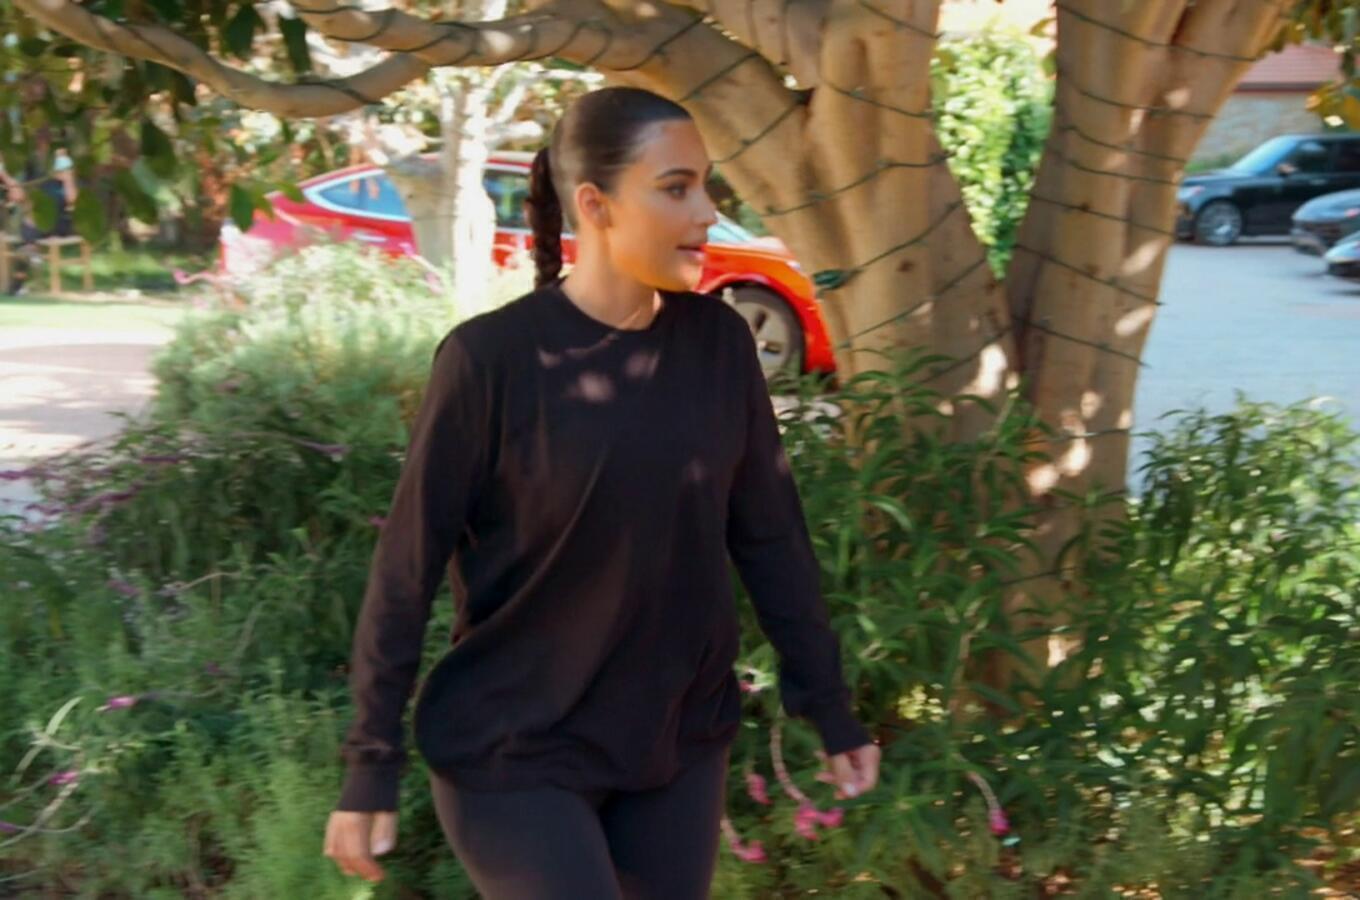 Kim Kardashian - Keeping Up With The Kardashians | Season 20 Episode 3 | Kim Kardashian style